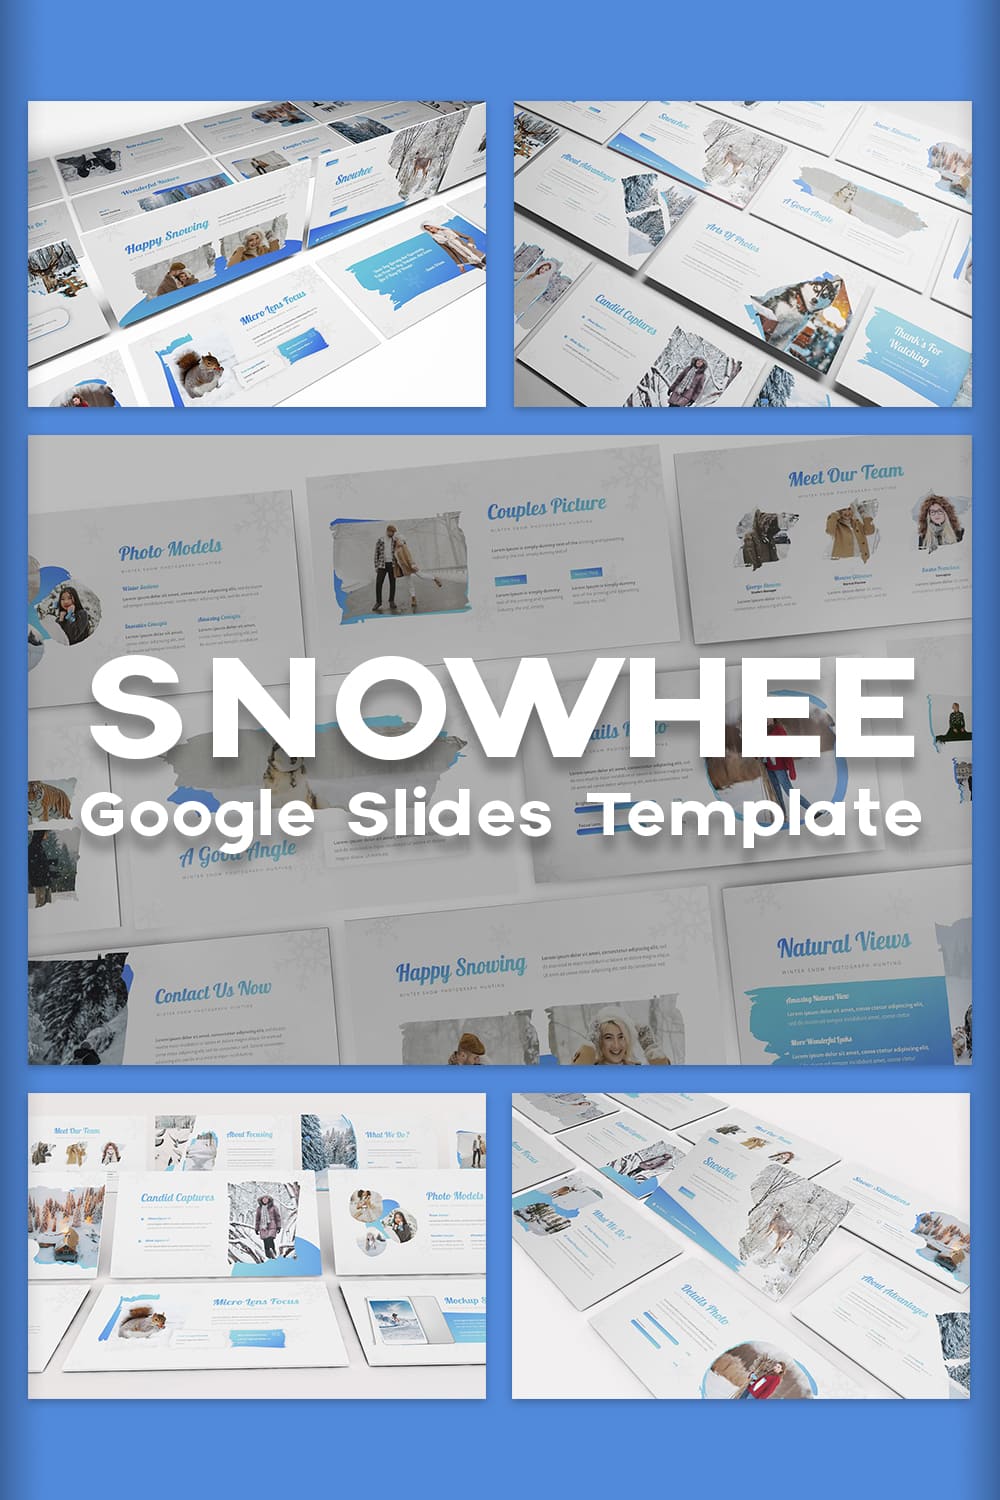 snowhee google slides template pinterest image.